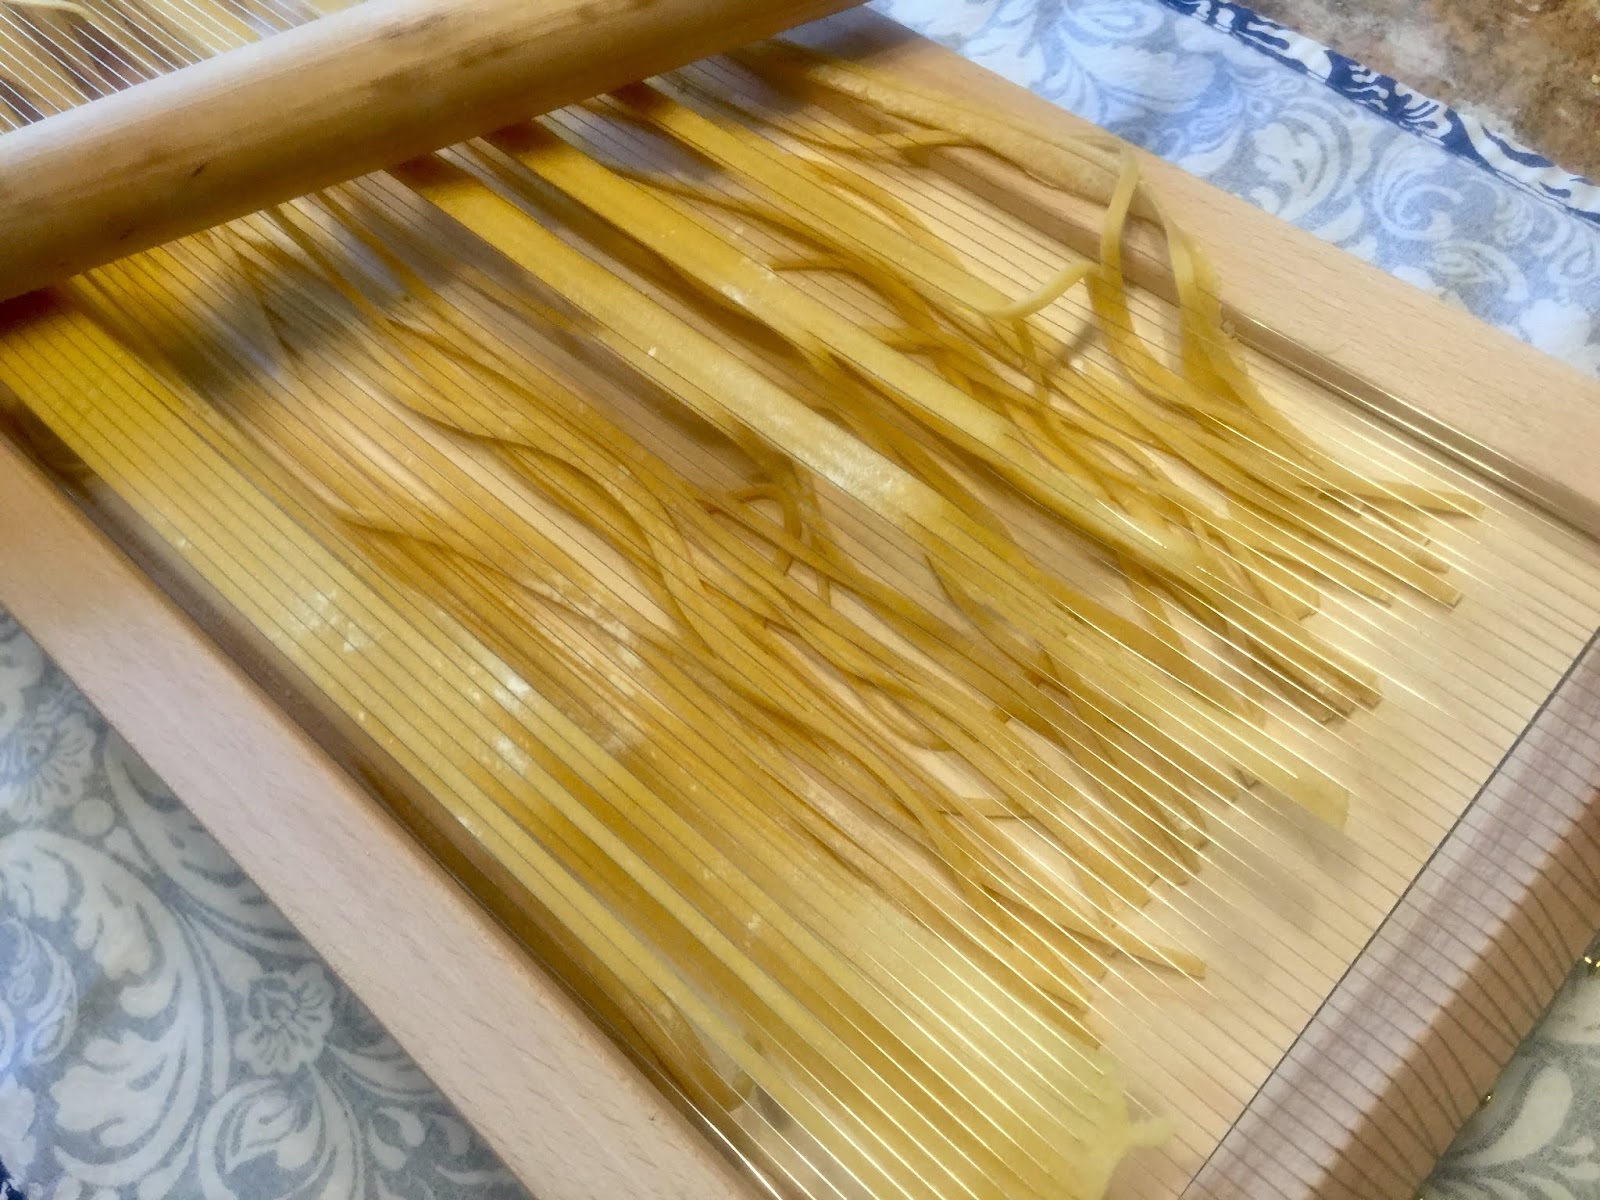 Making a Pasta Guitar